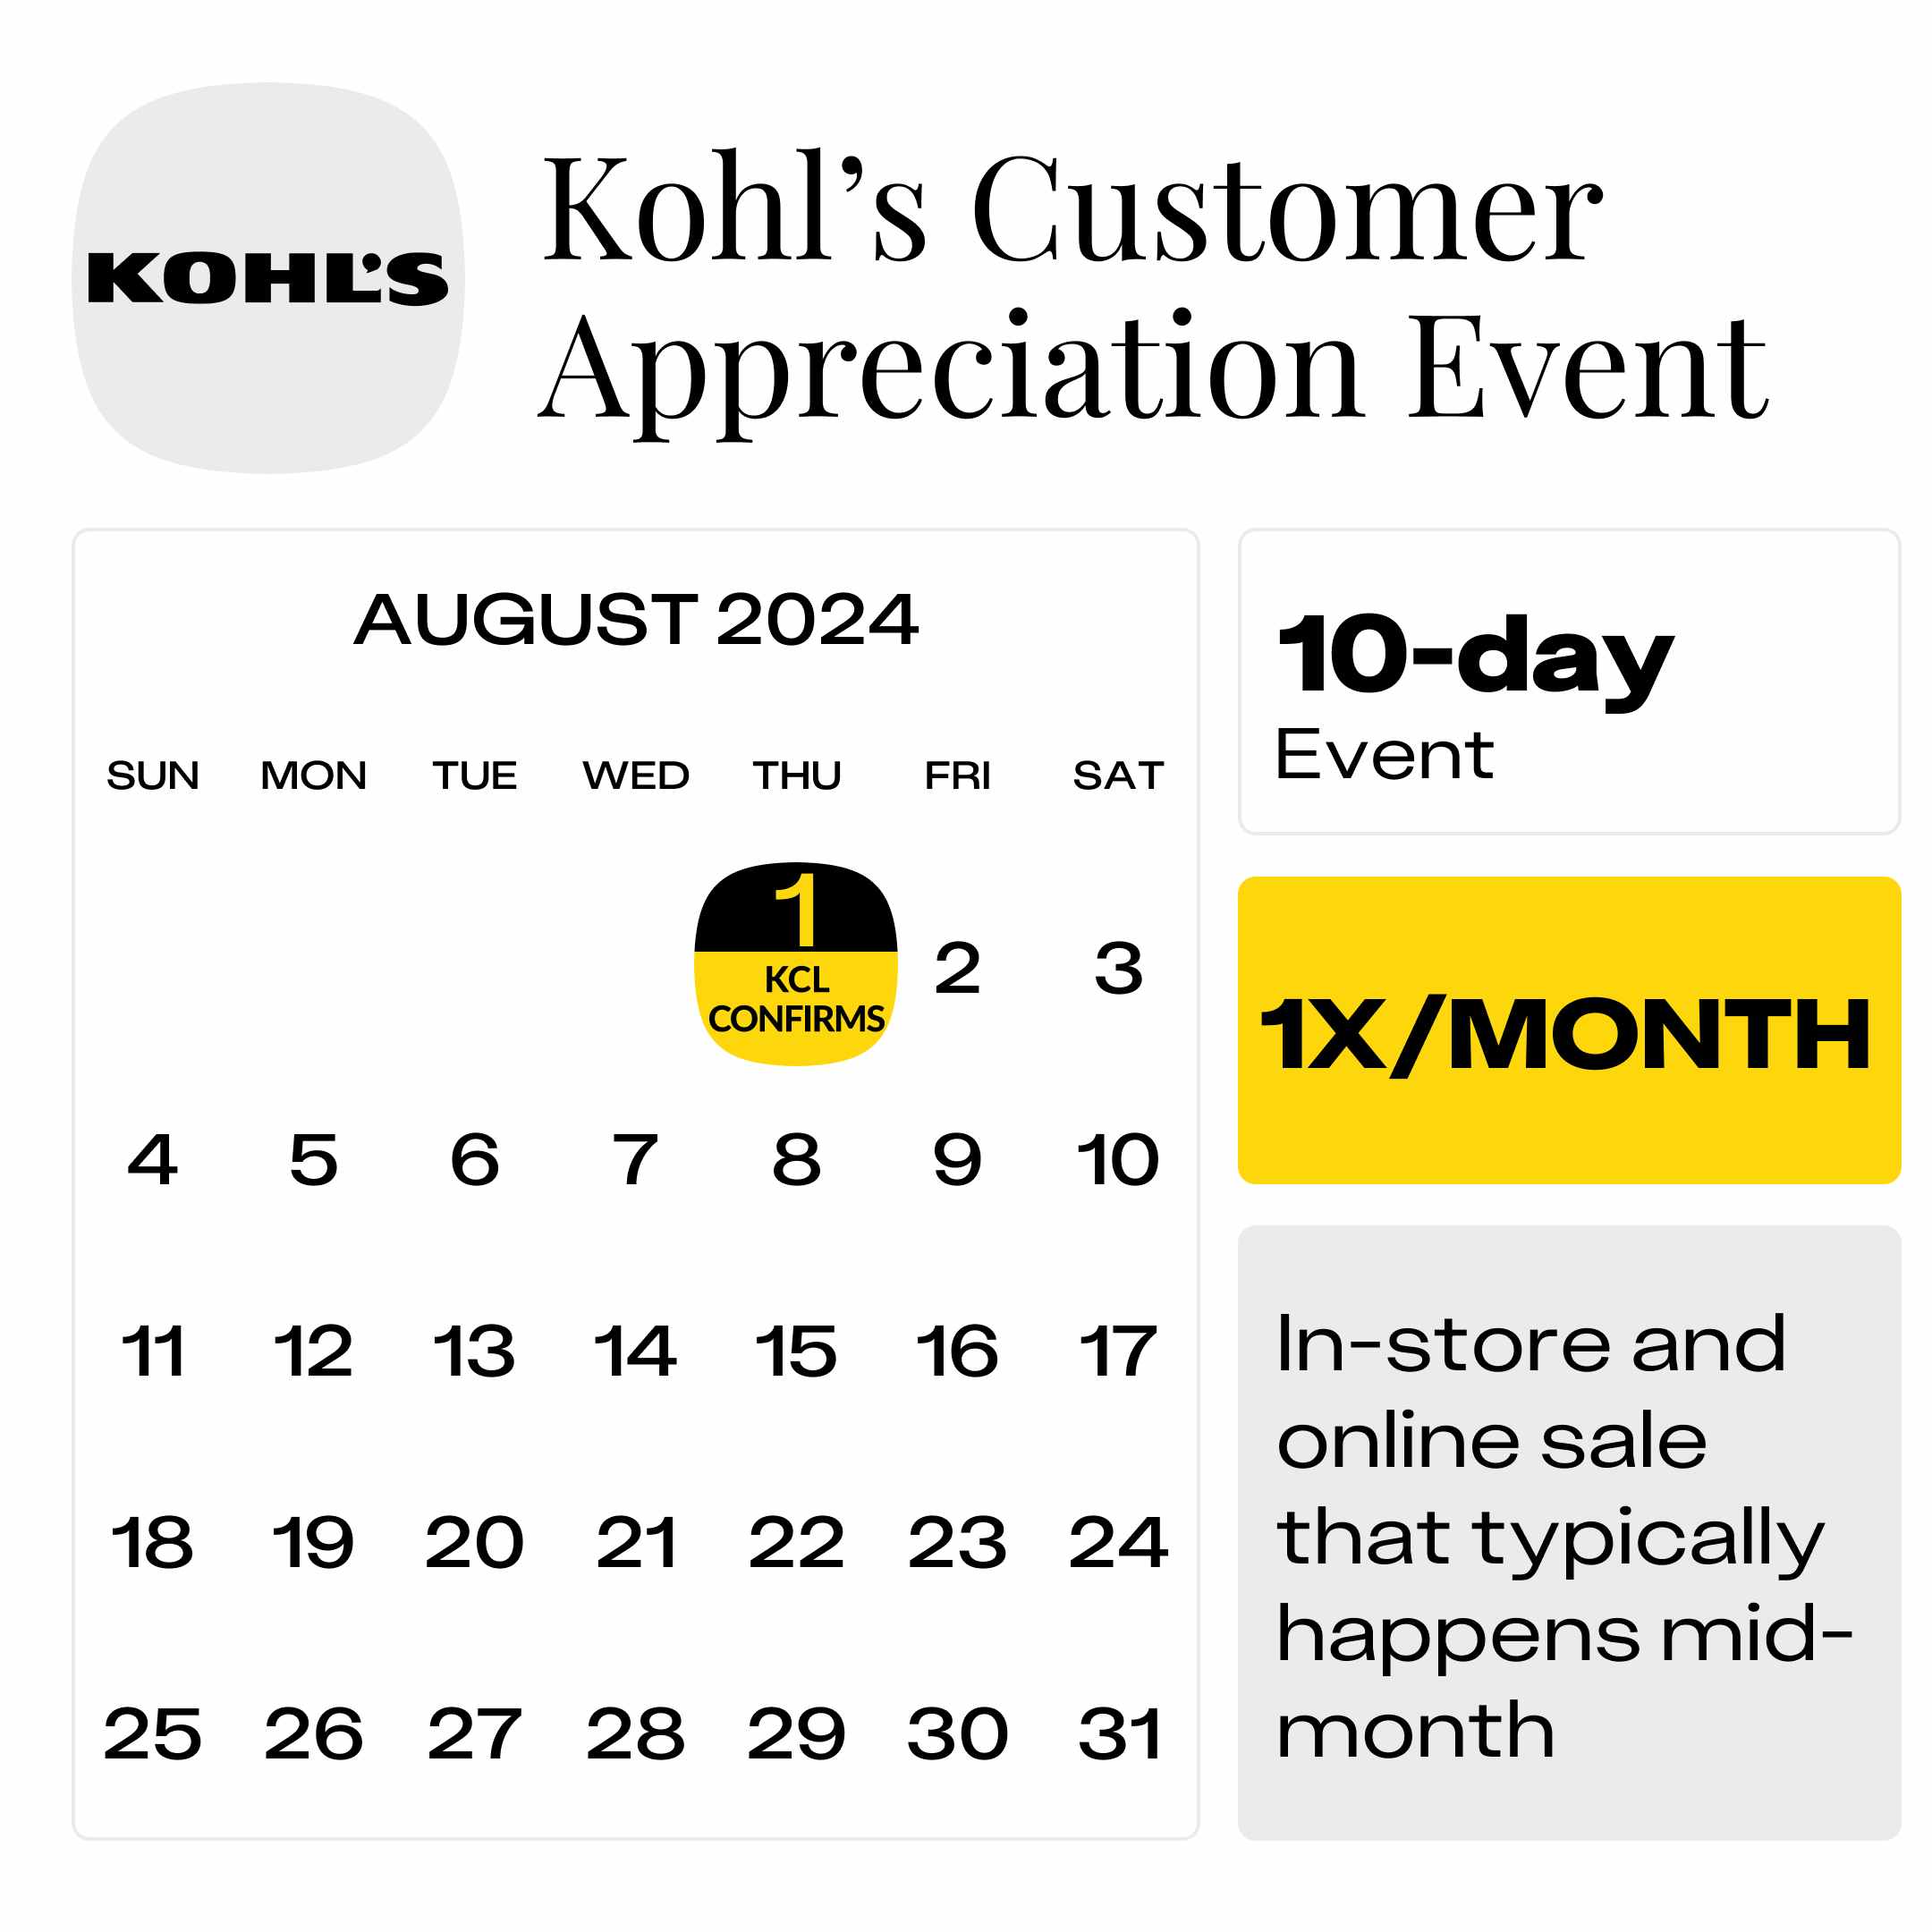 Kohls-Customer-Appreciation-Event-Aug-2024